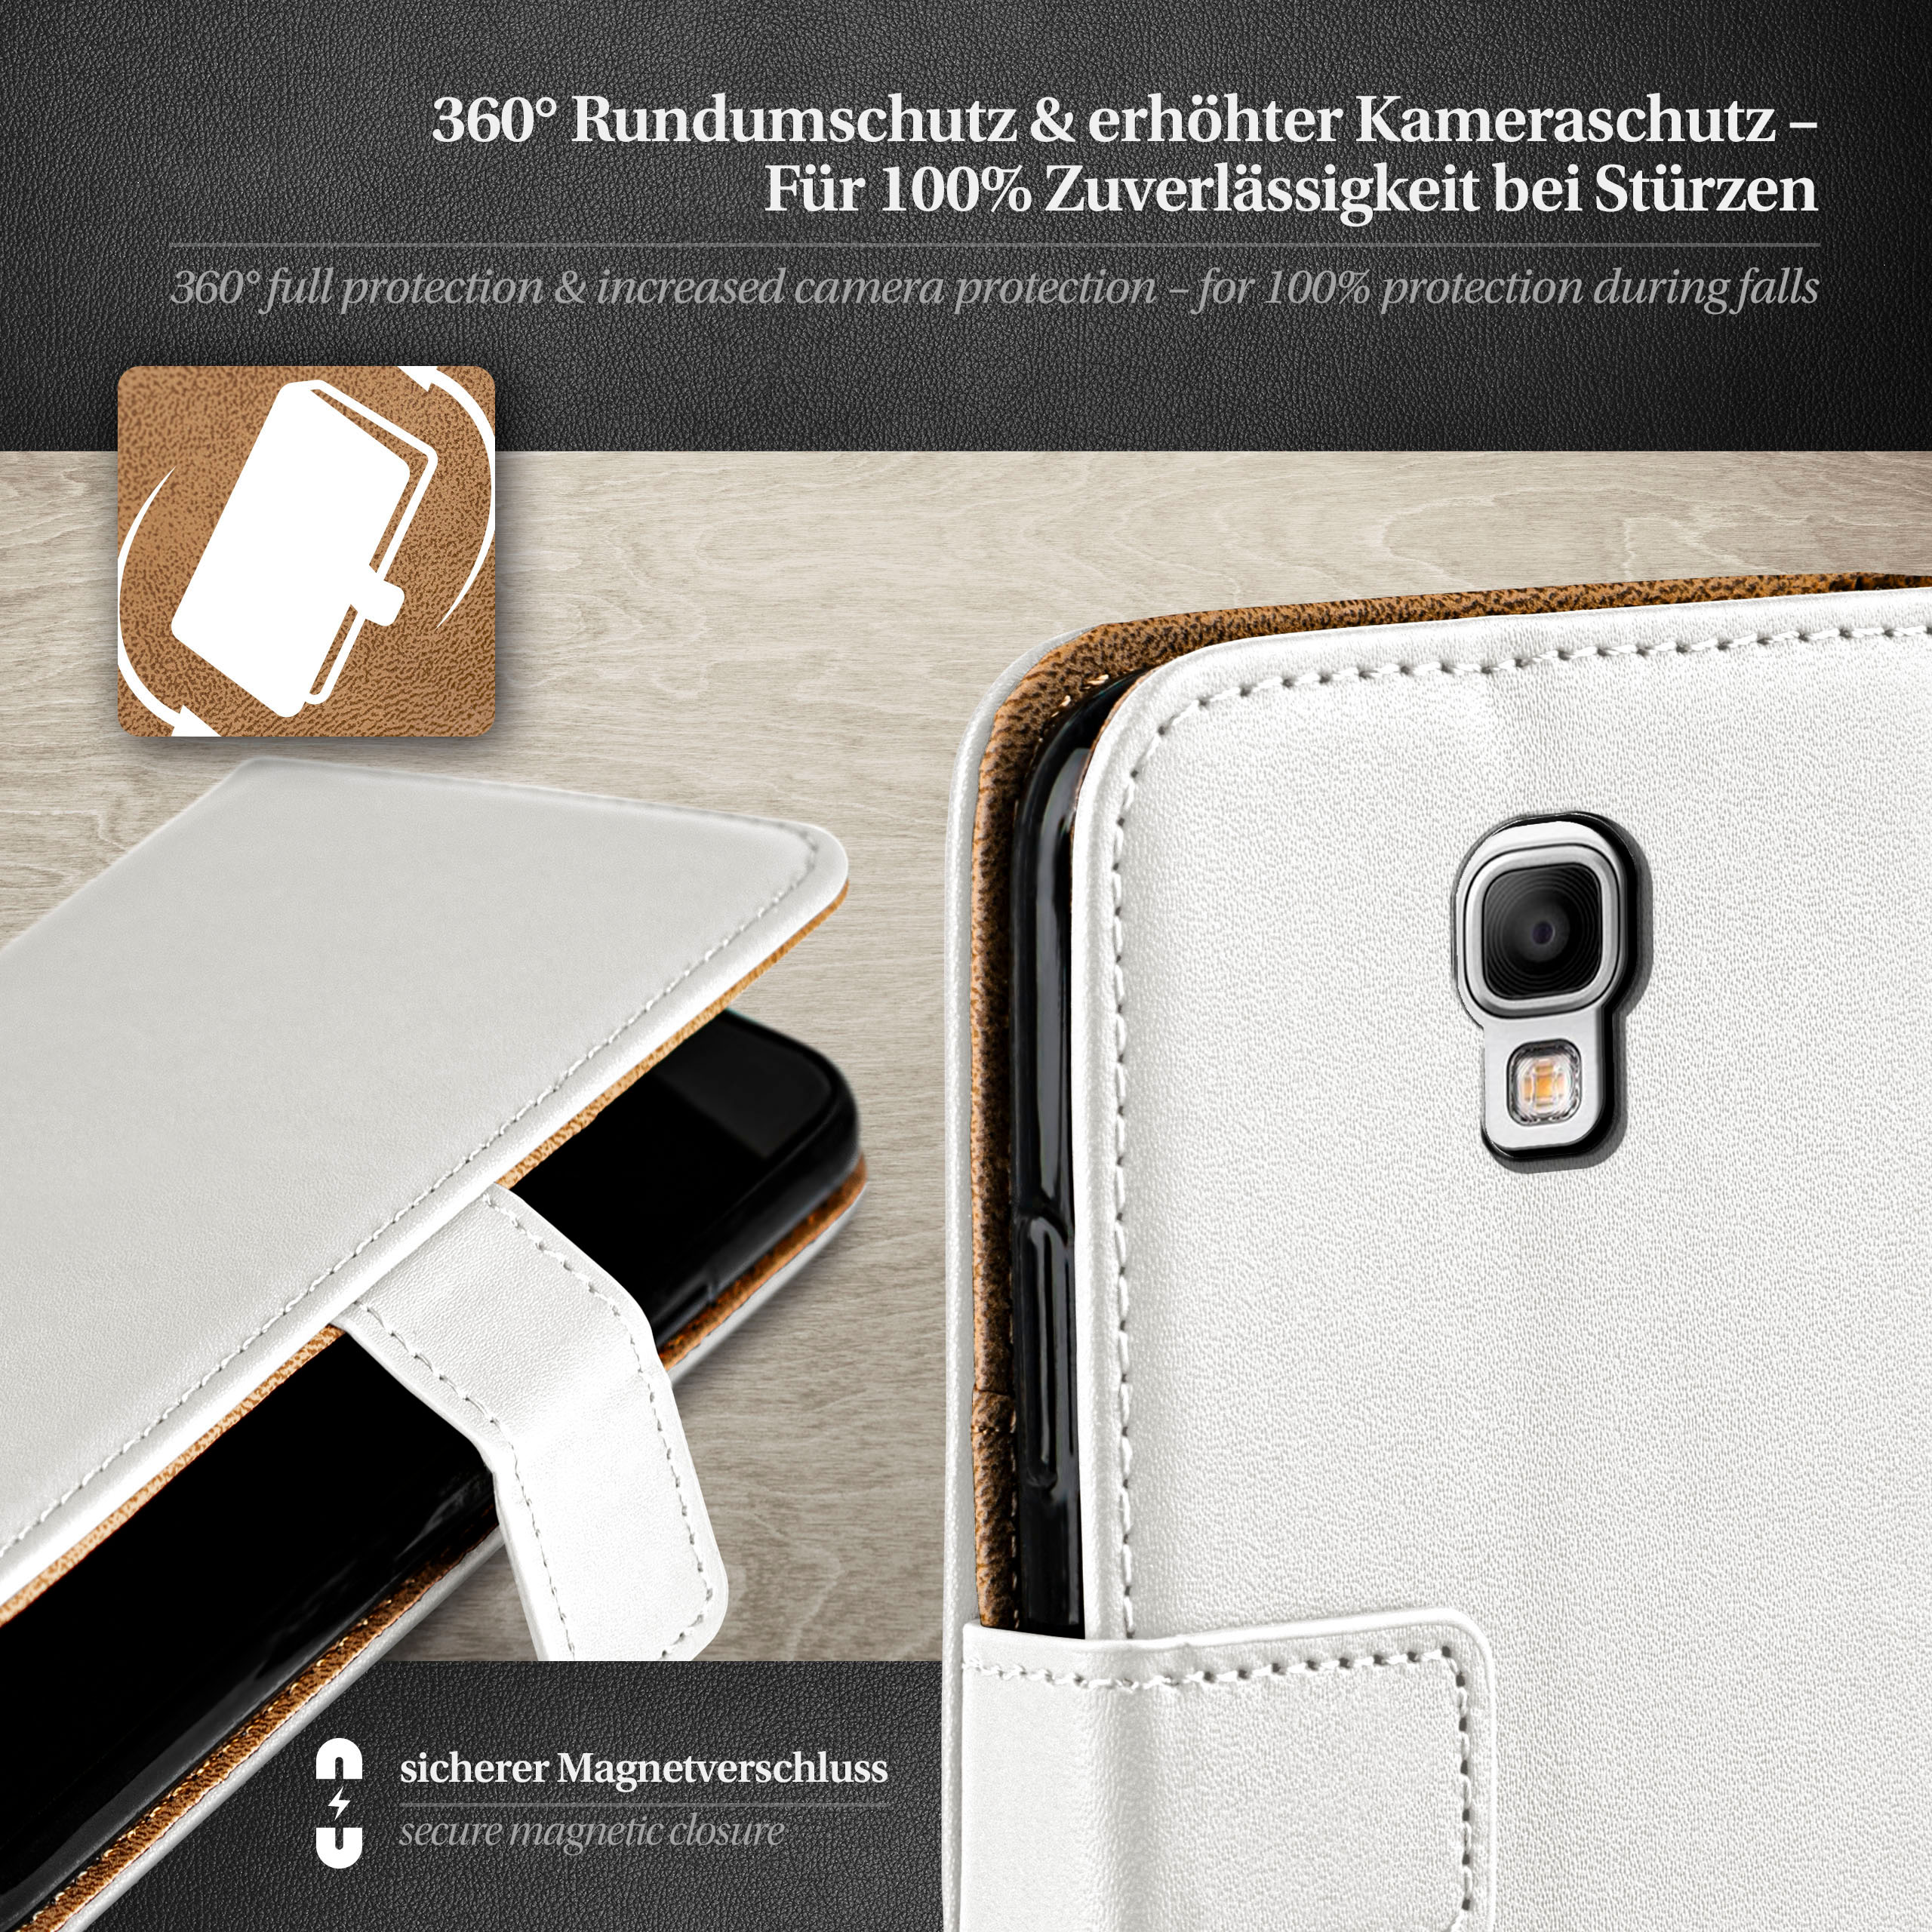 Samsung, MOEX 3 Neo, Book Note Case, Galaxy Bookcover, Pearl-White